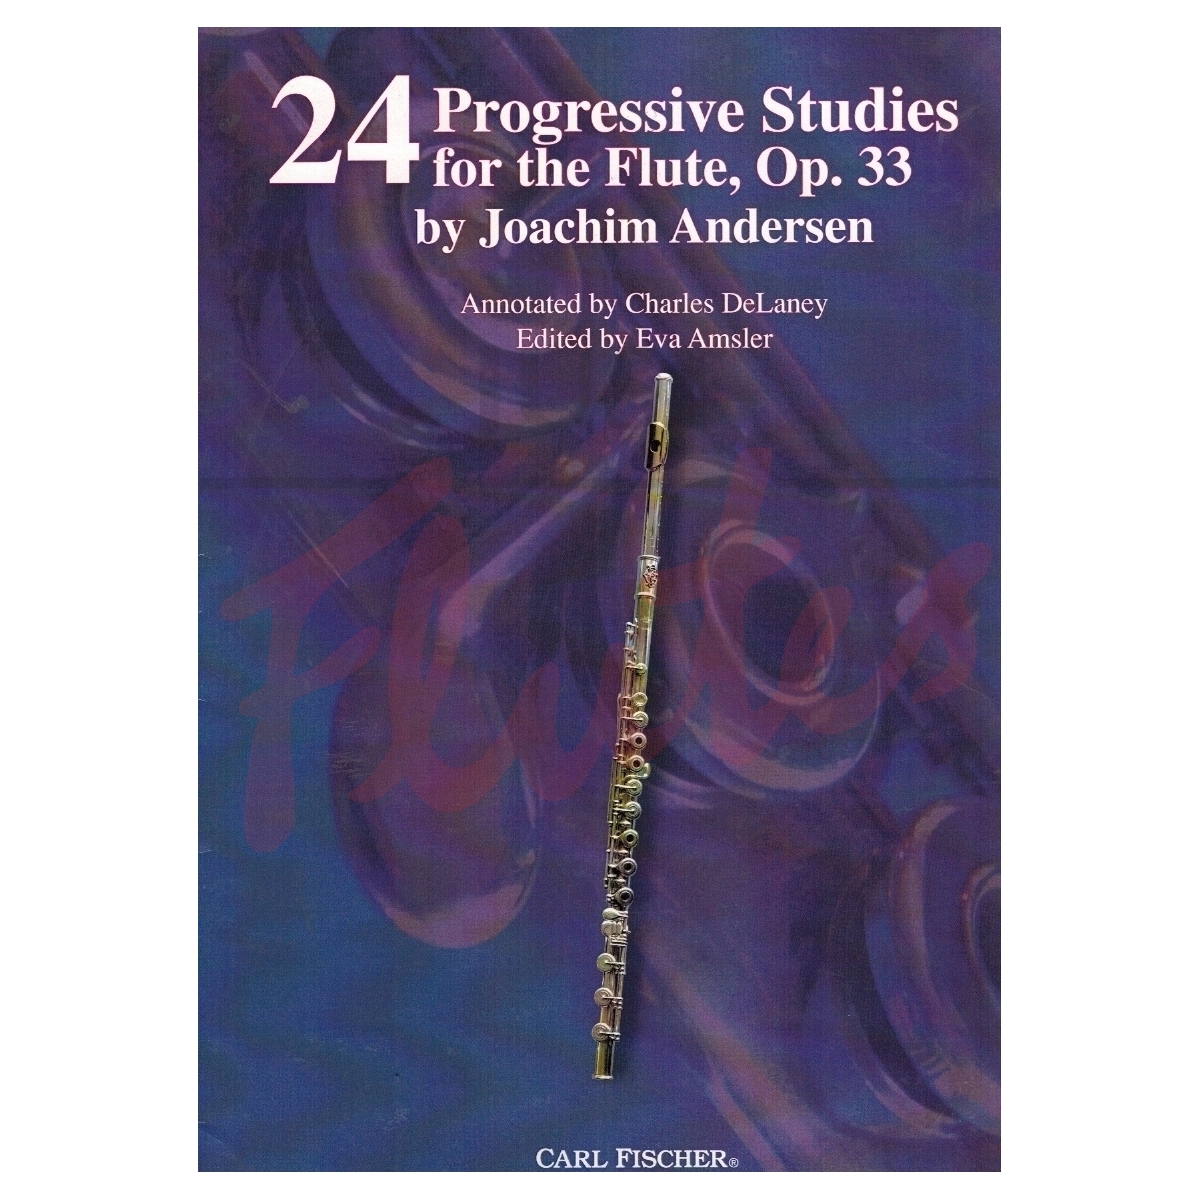 24 Progressive Studies for the Flute